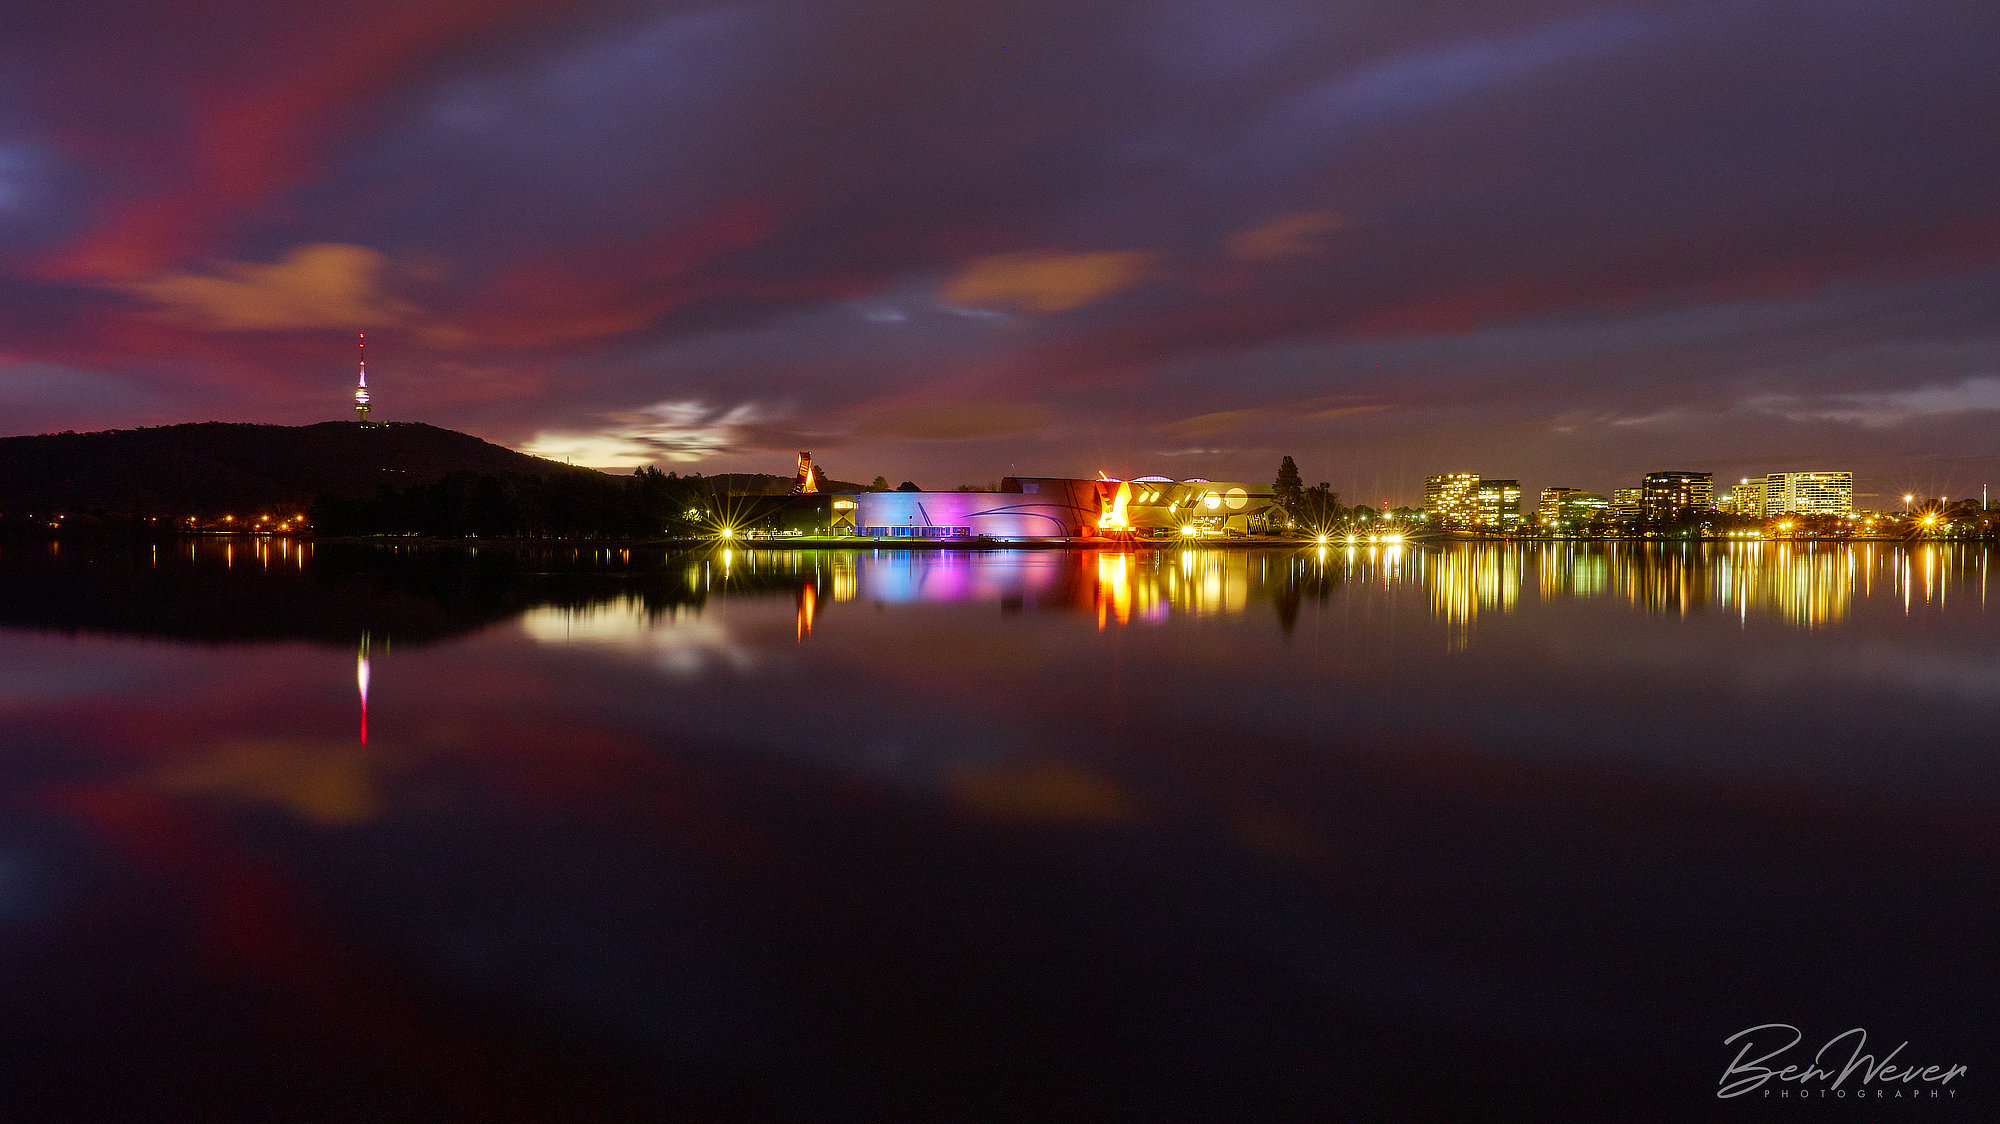 Lake Burley Griffin Sunset